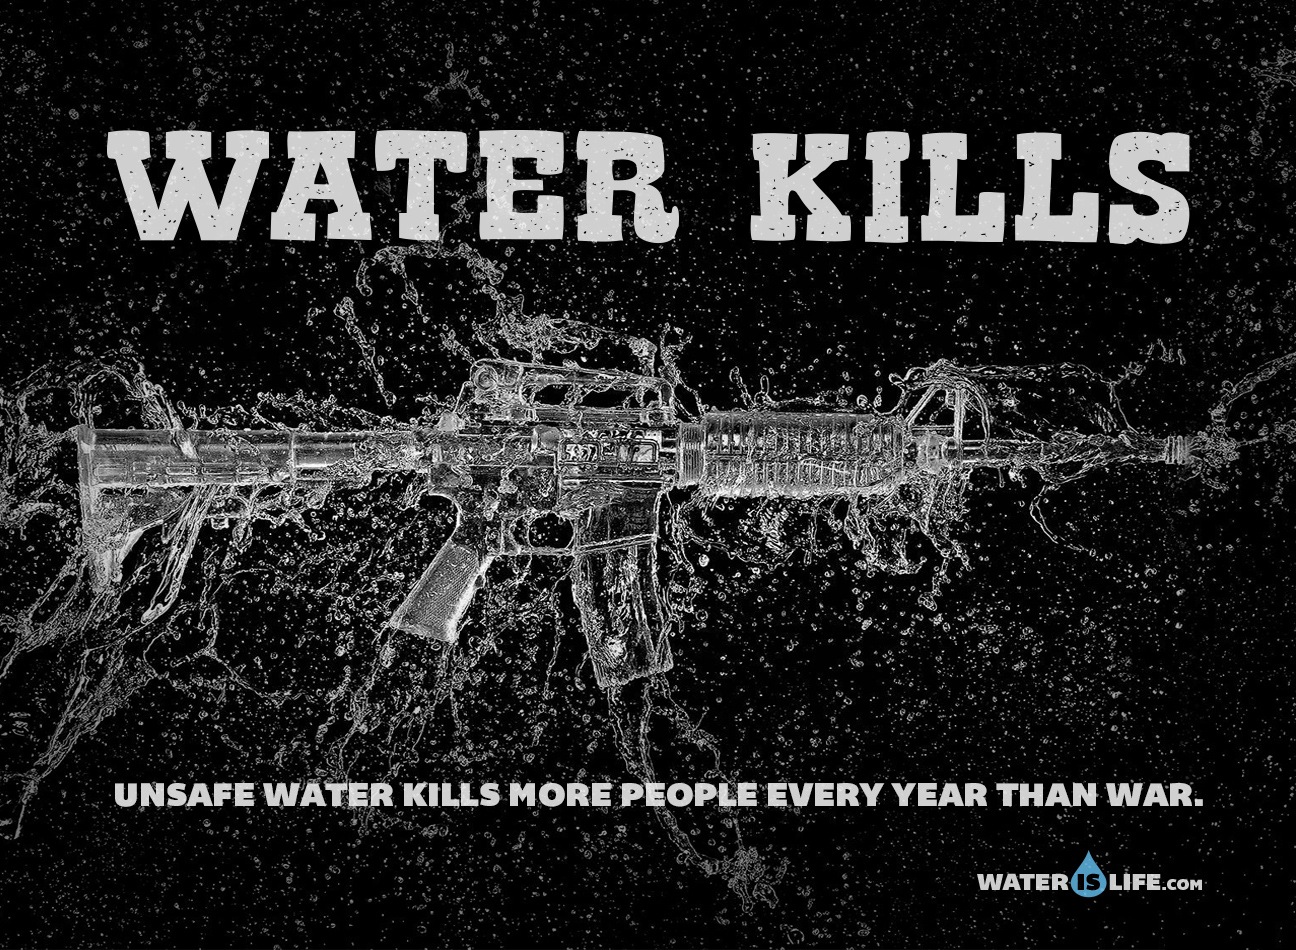 Most kill перевод. Water advertising. Ватер реклама. Вода реклама креатив.